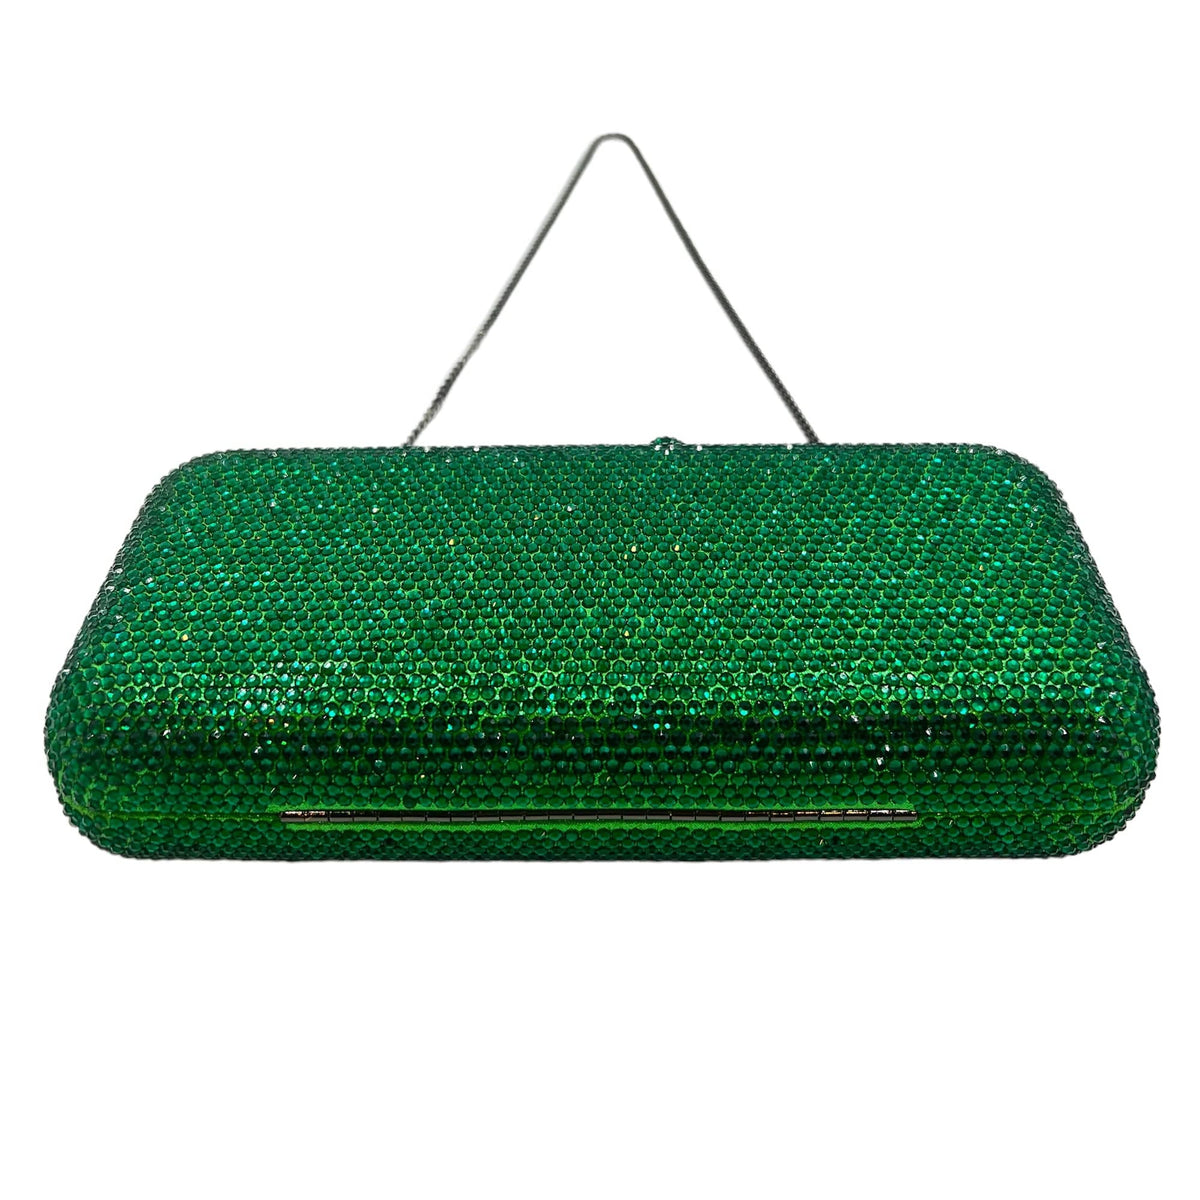 HANDBAG Rhinestone Convertible Clutch Evening Bag - Emerald Green